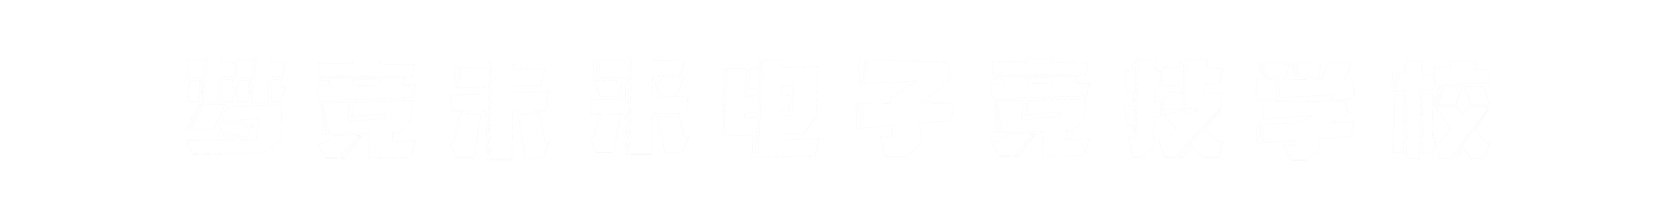 梦竞未来惠州banner字